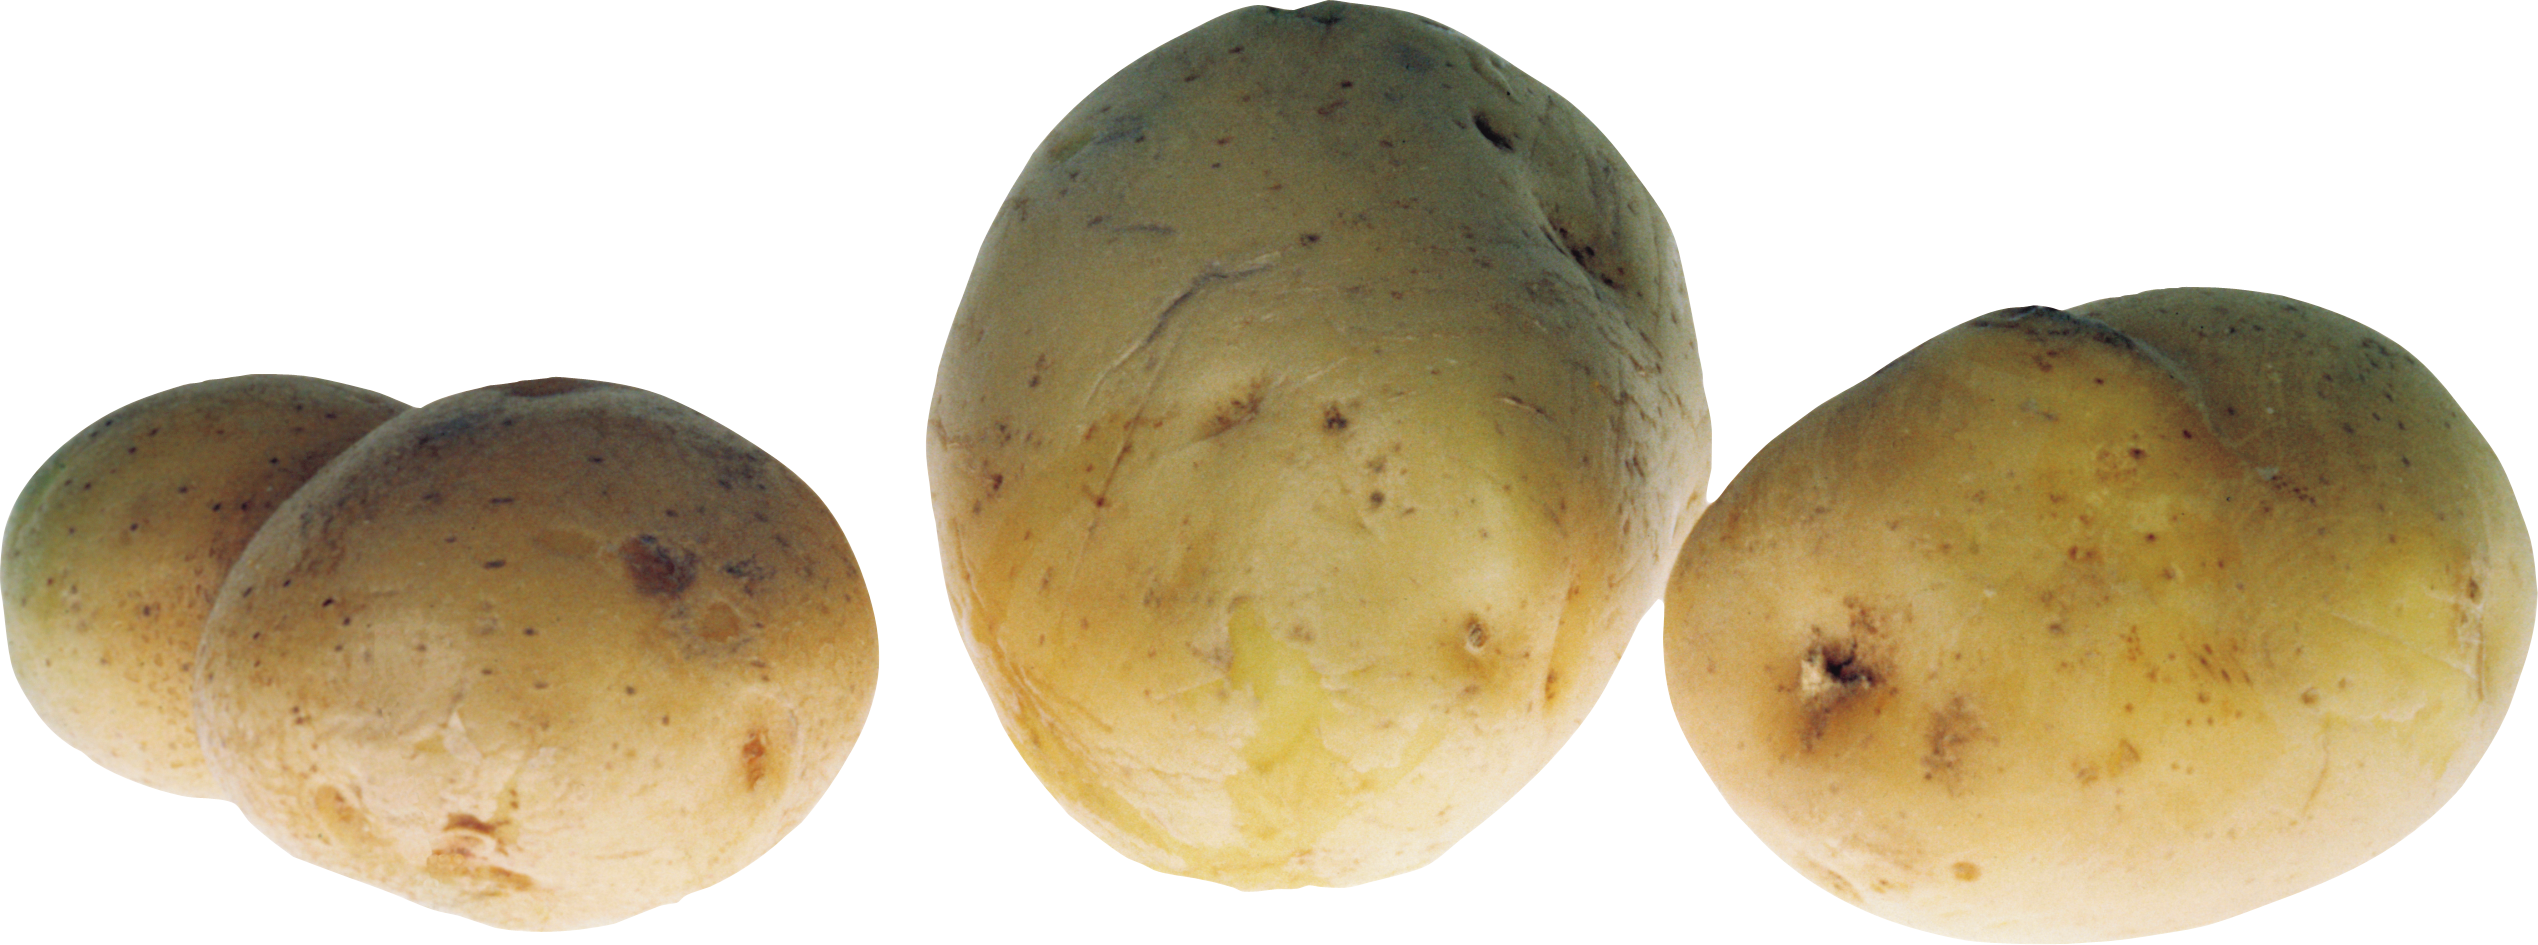 Tiga kentang